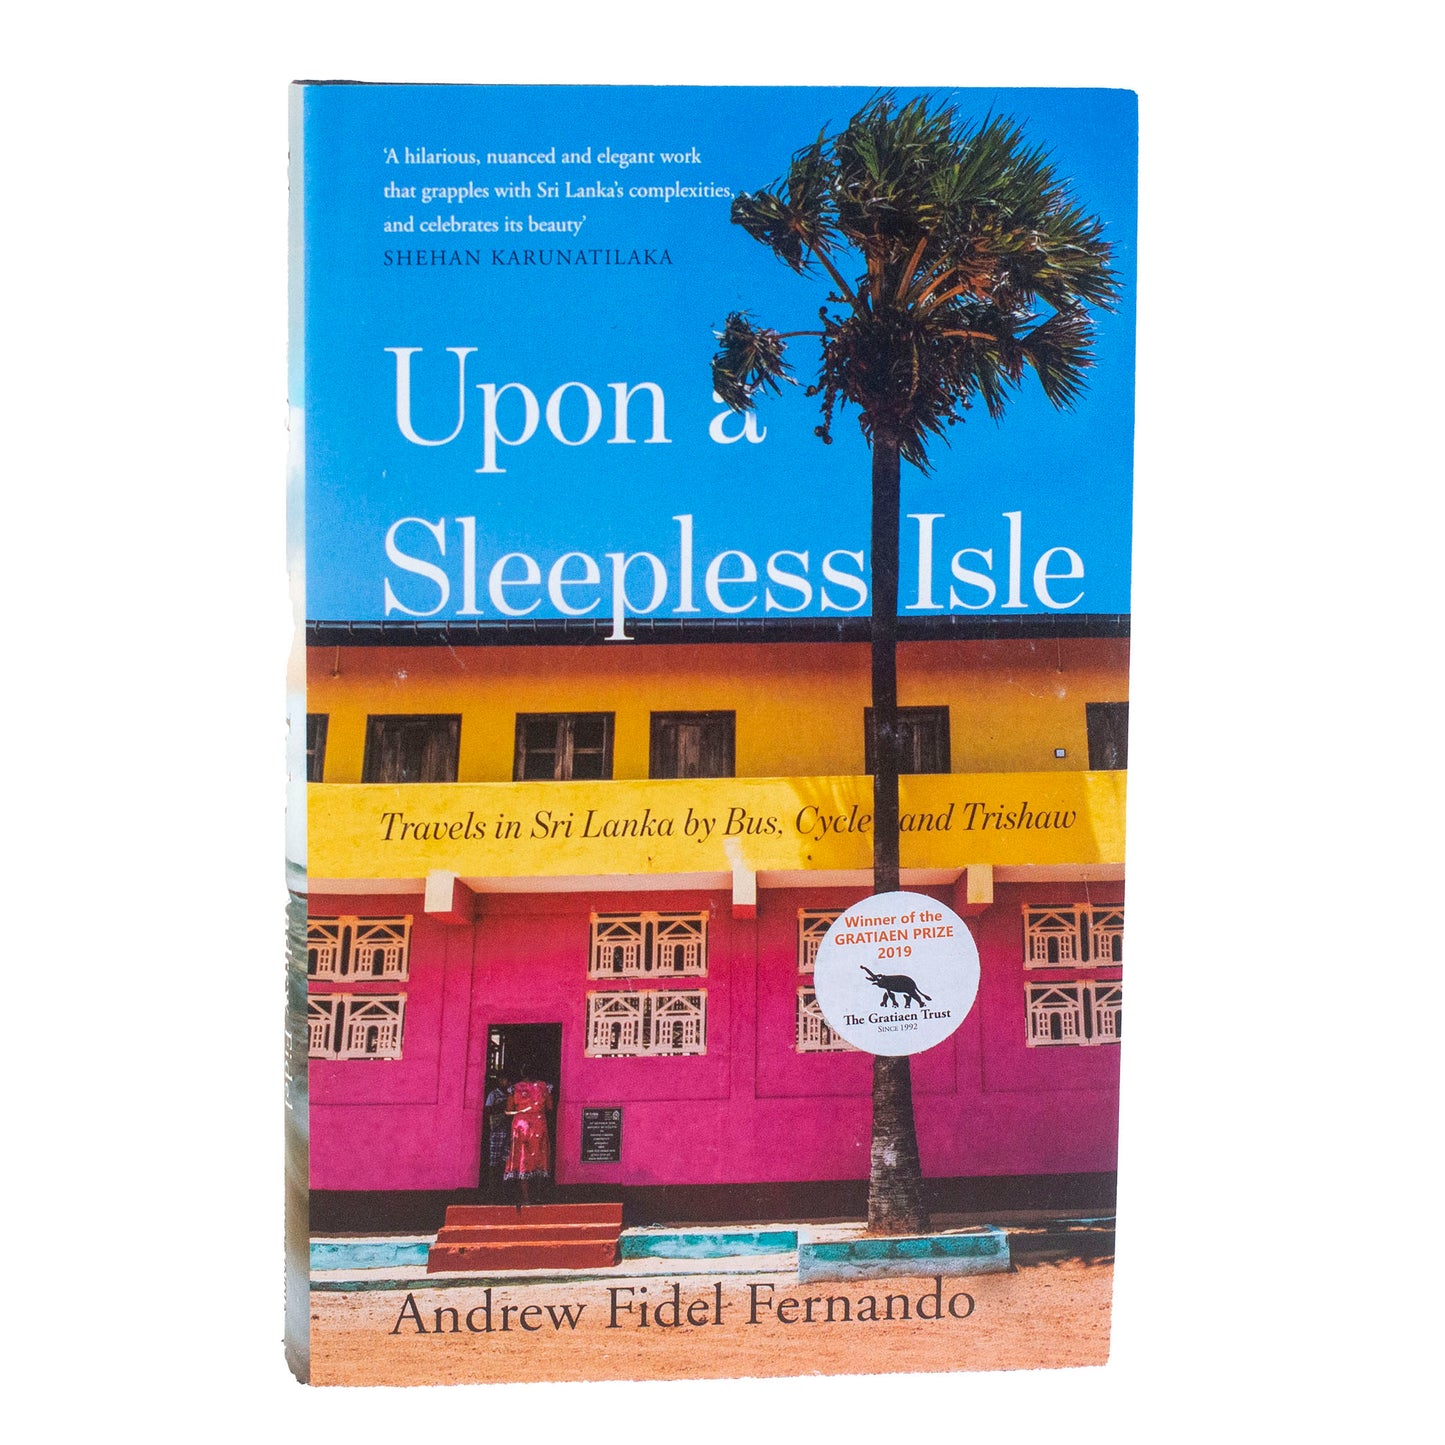 Upon a Sleepless Isle by Andrew Fidel Fernando